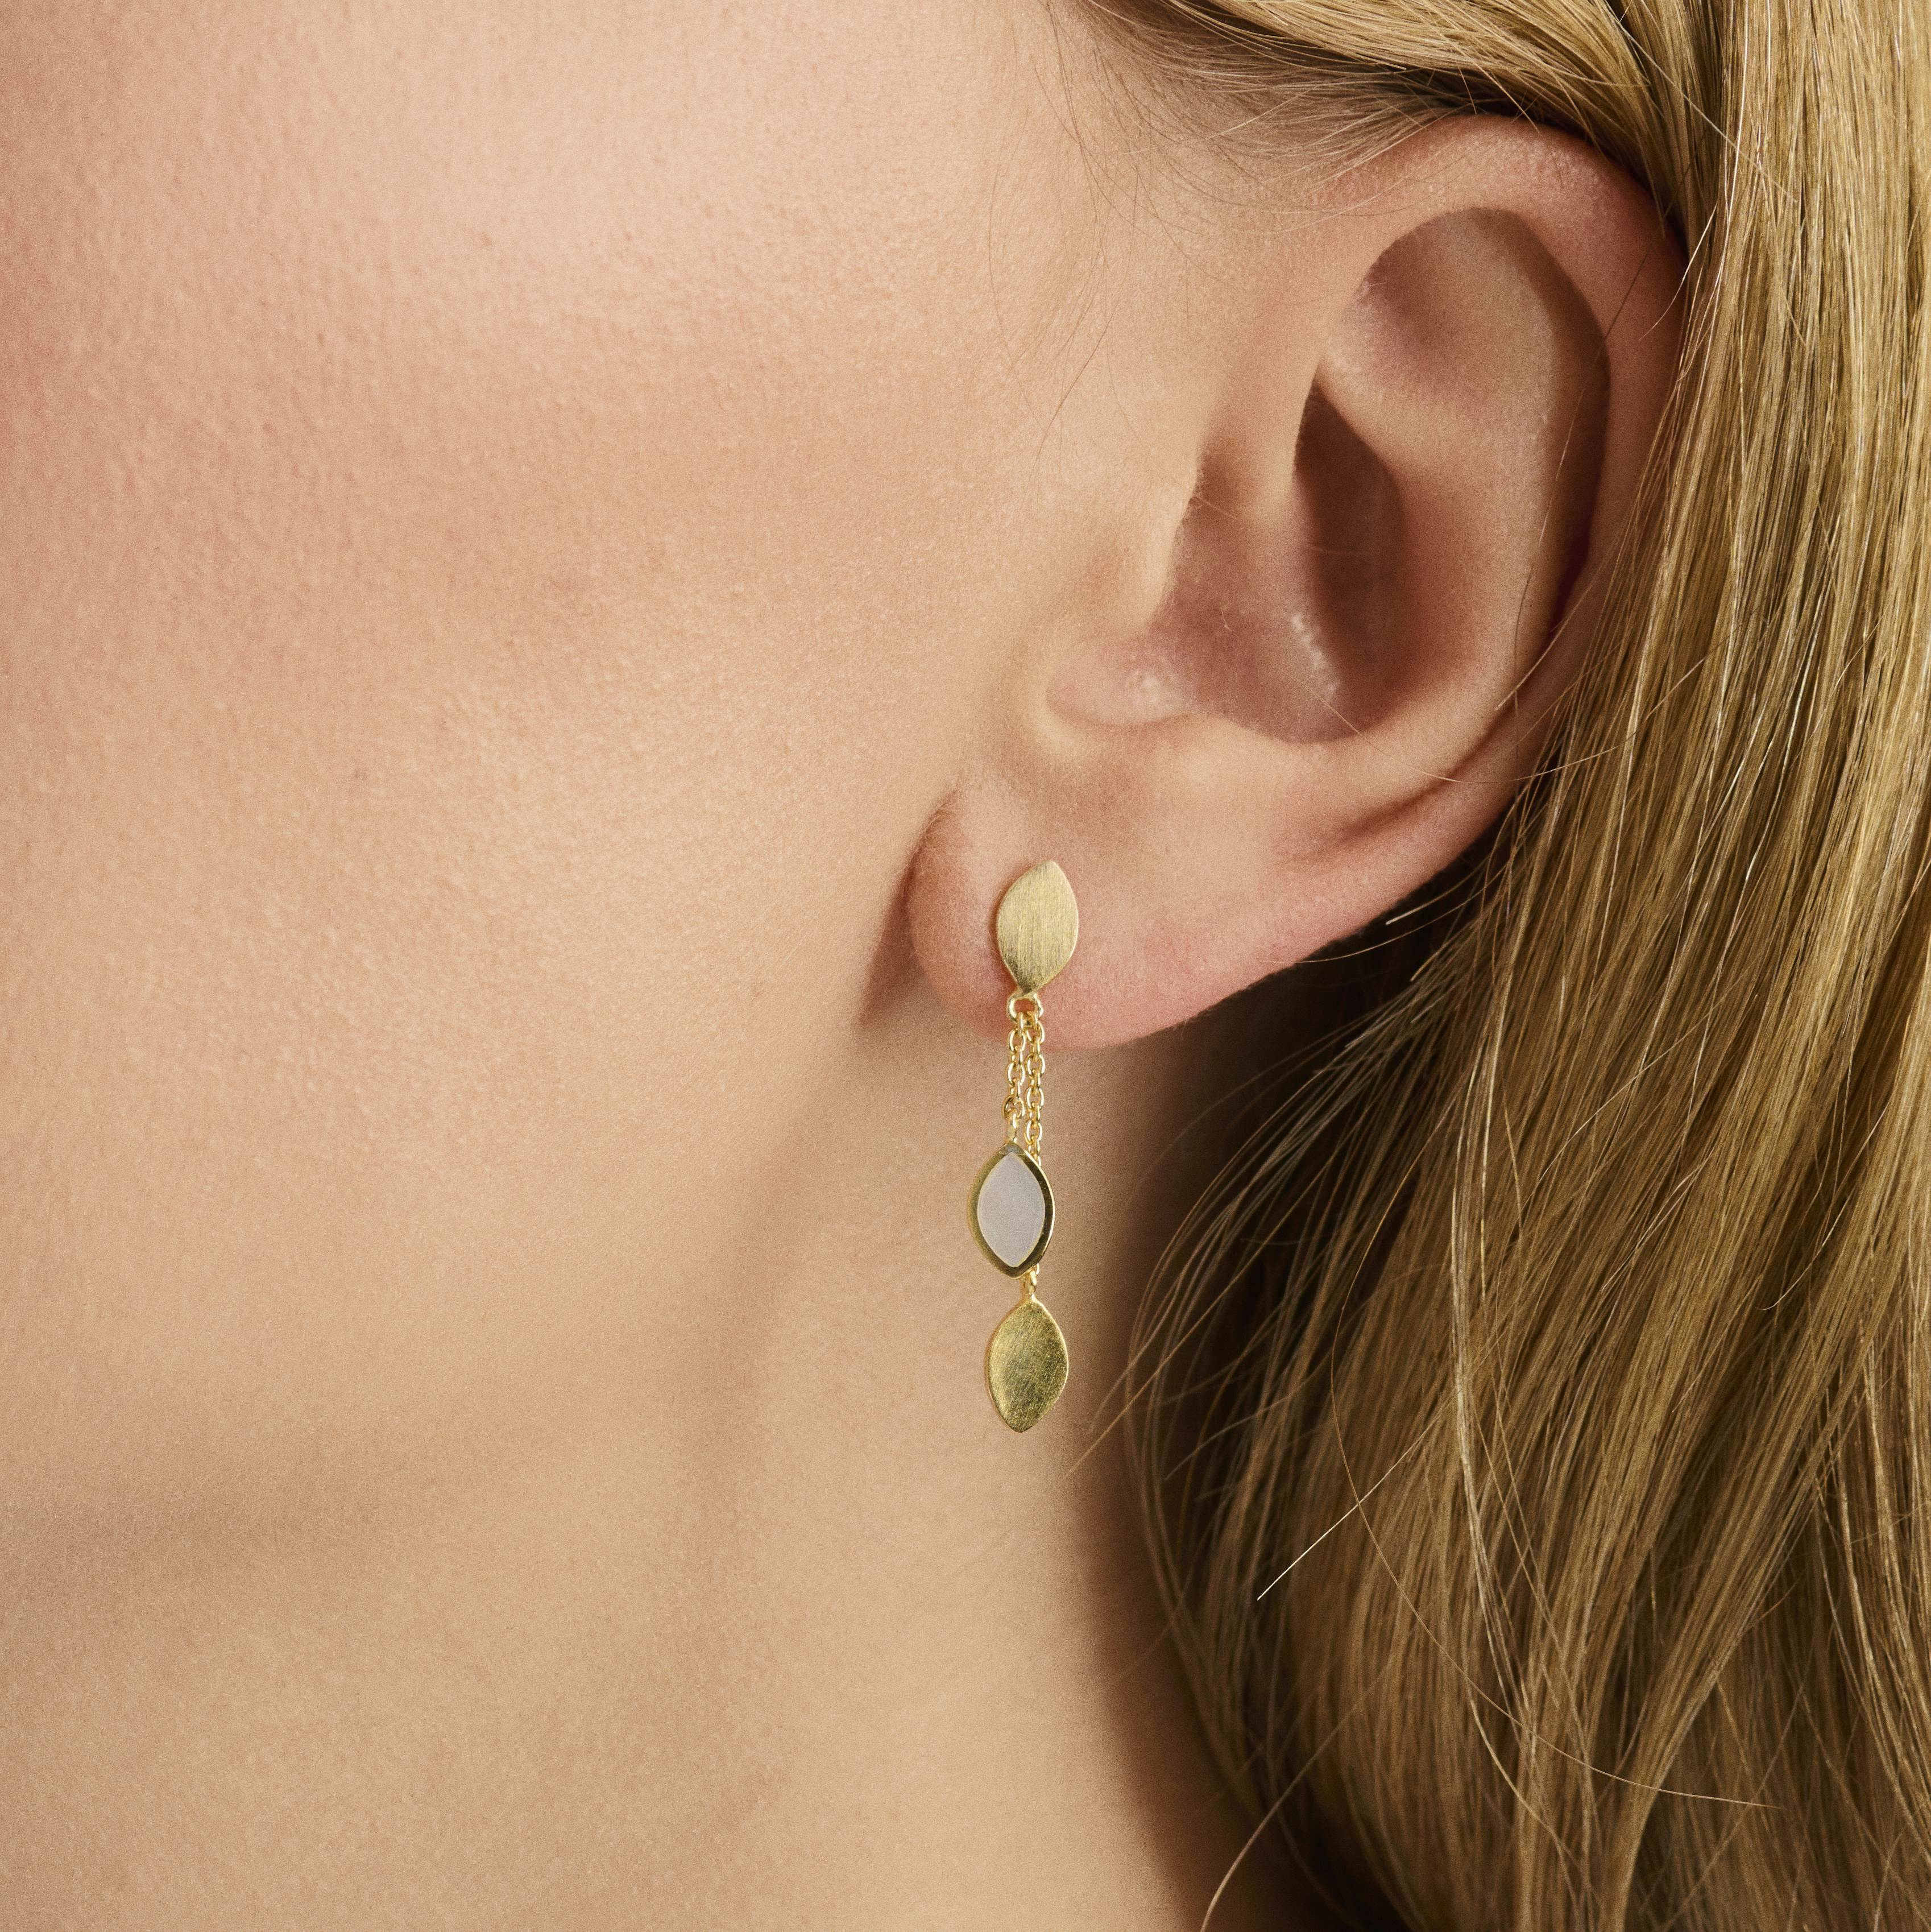 Flake Earrings from Pernille Corydon in Goldplated-Silver Sterling 925